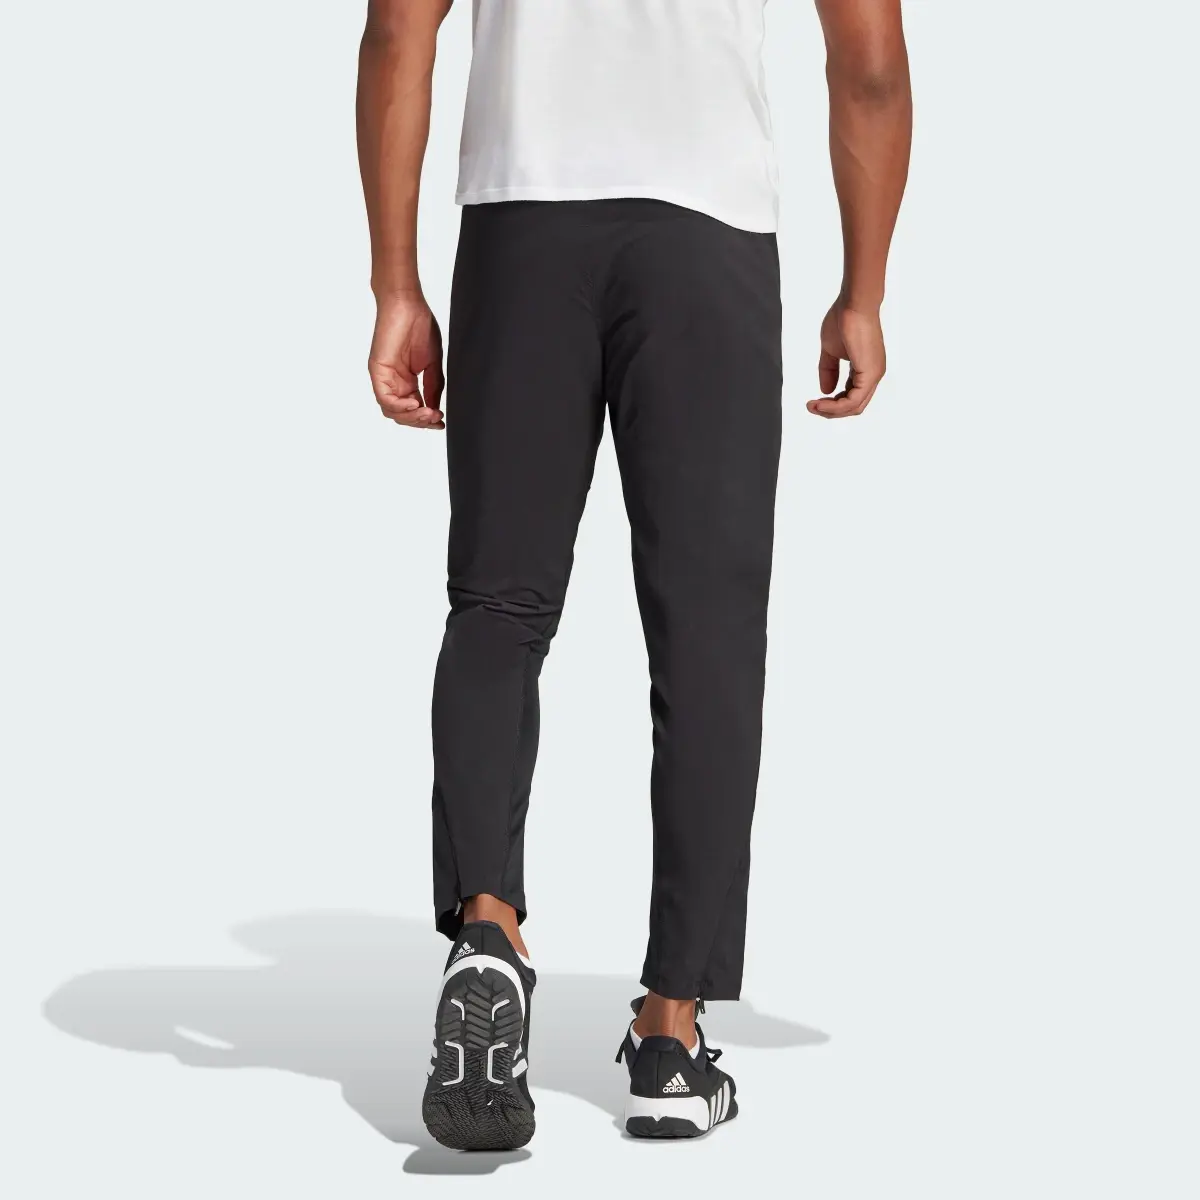 Adidas Designed for Training CORDURA Workout Pants. 3